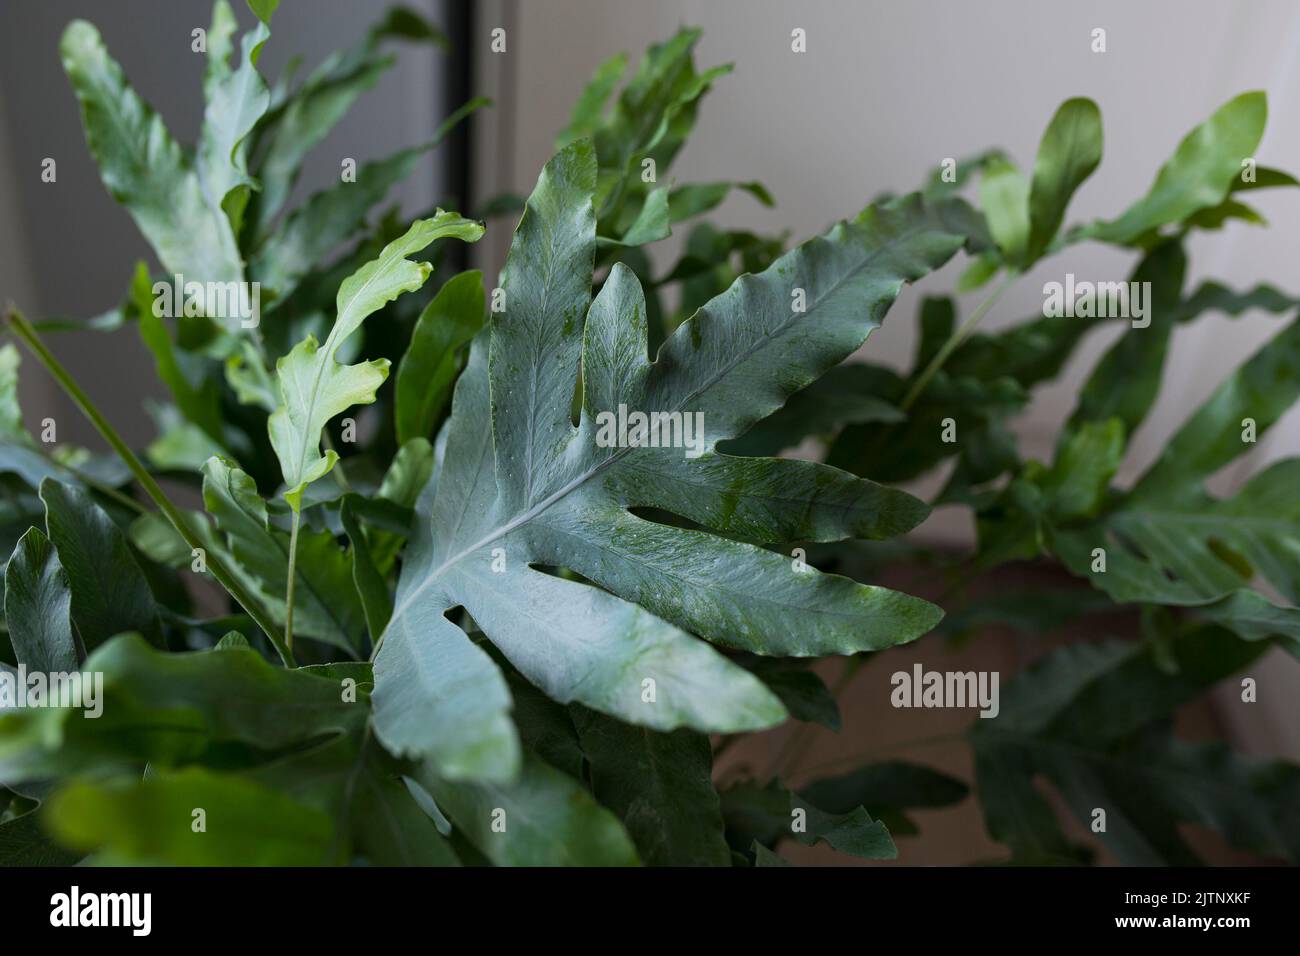 A plant of Blue Star fern (Phlebodium aureum), a fancy houseplant. Detail of a single leaf. Stock Photo